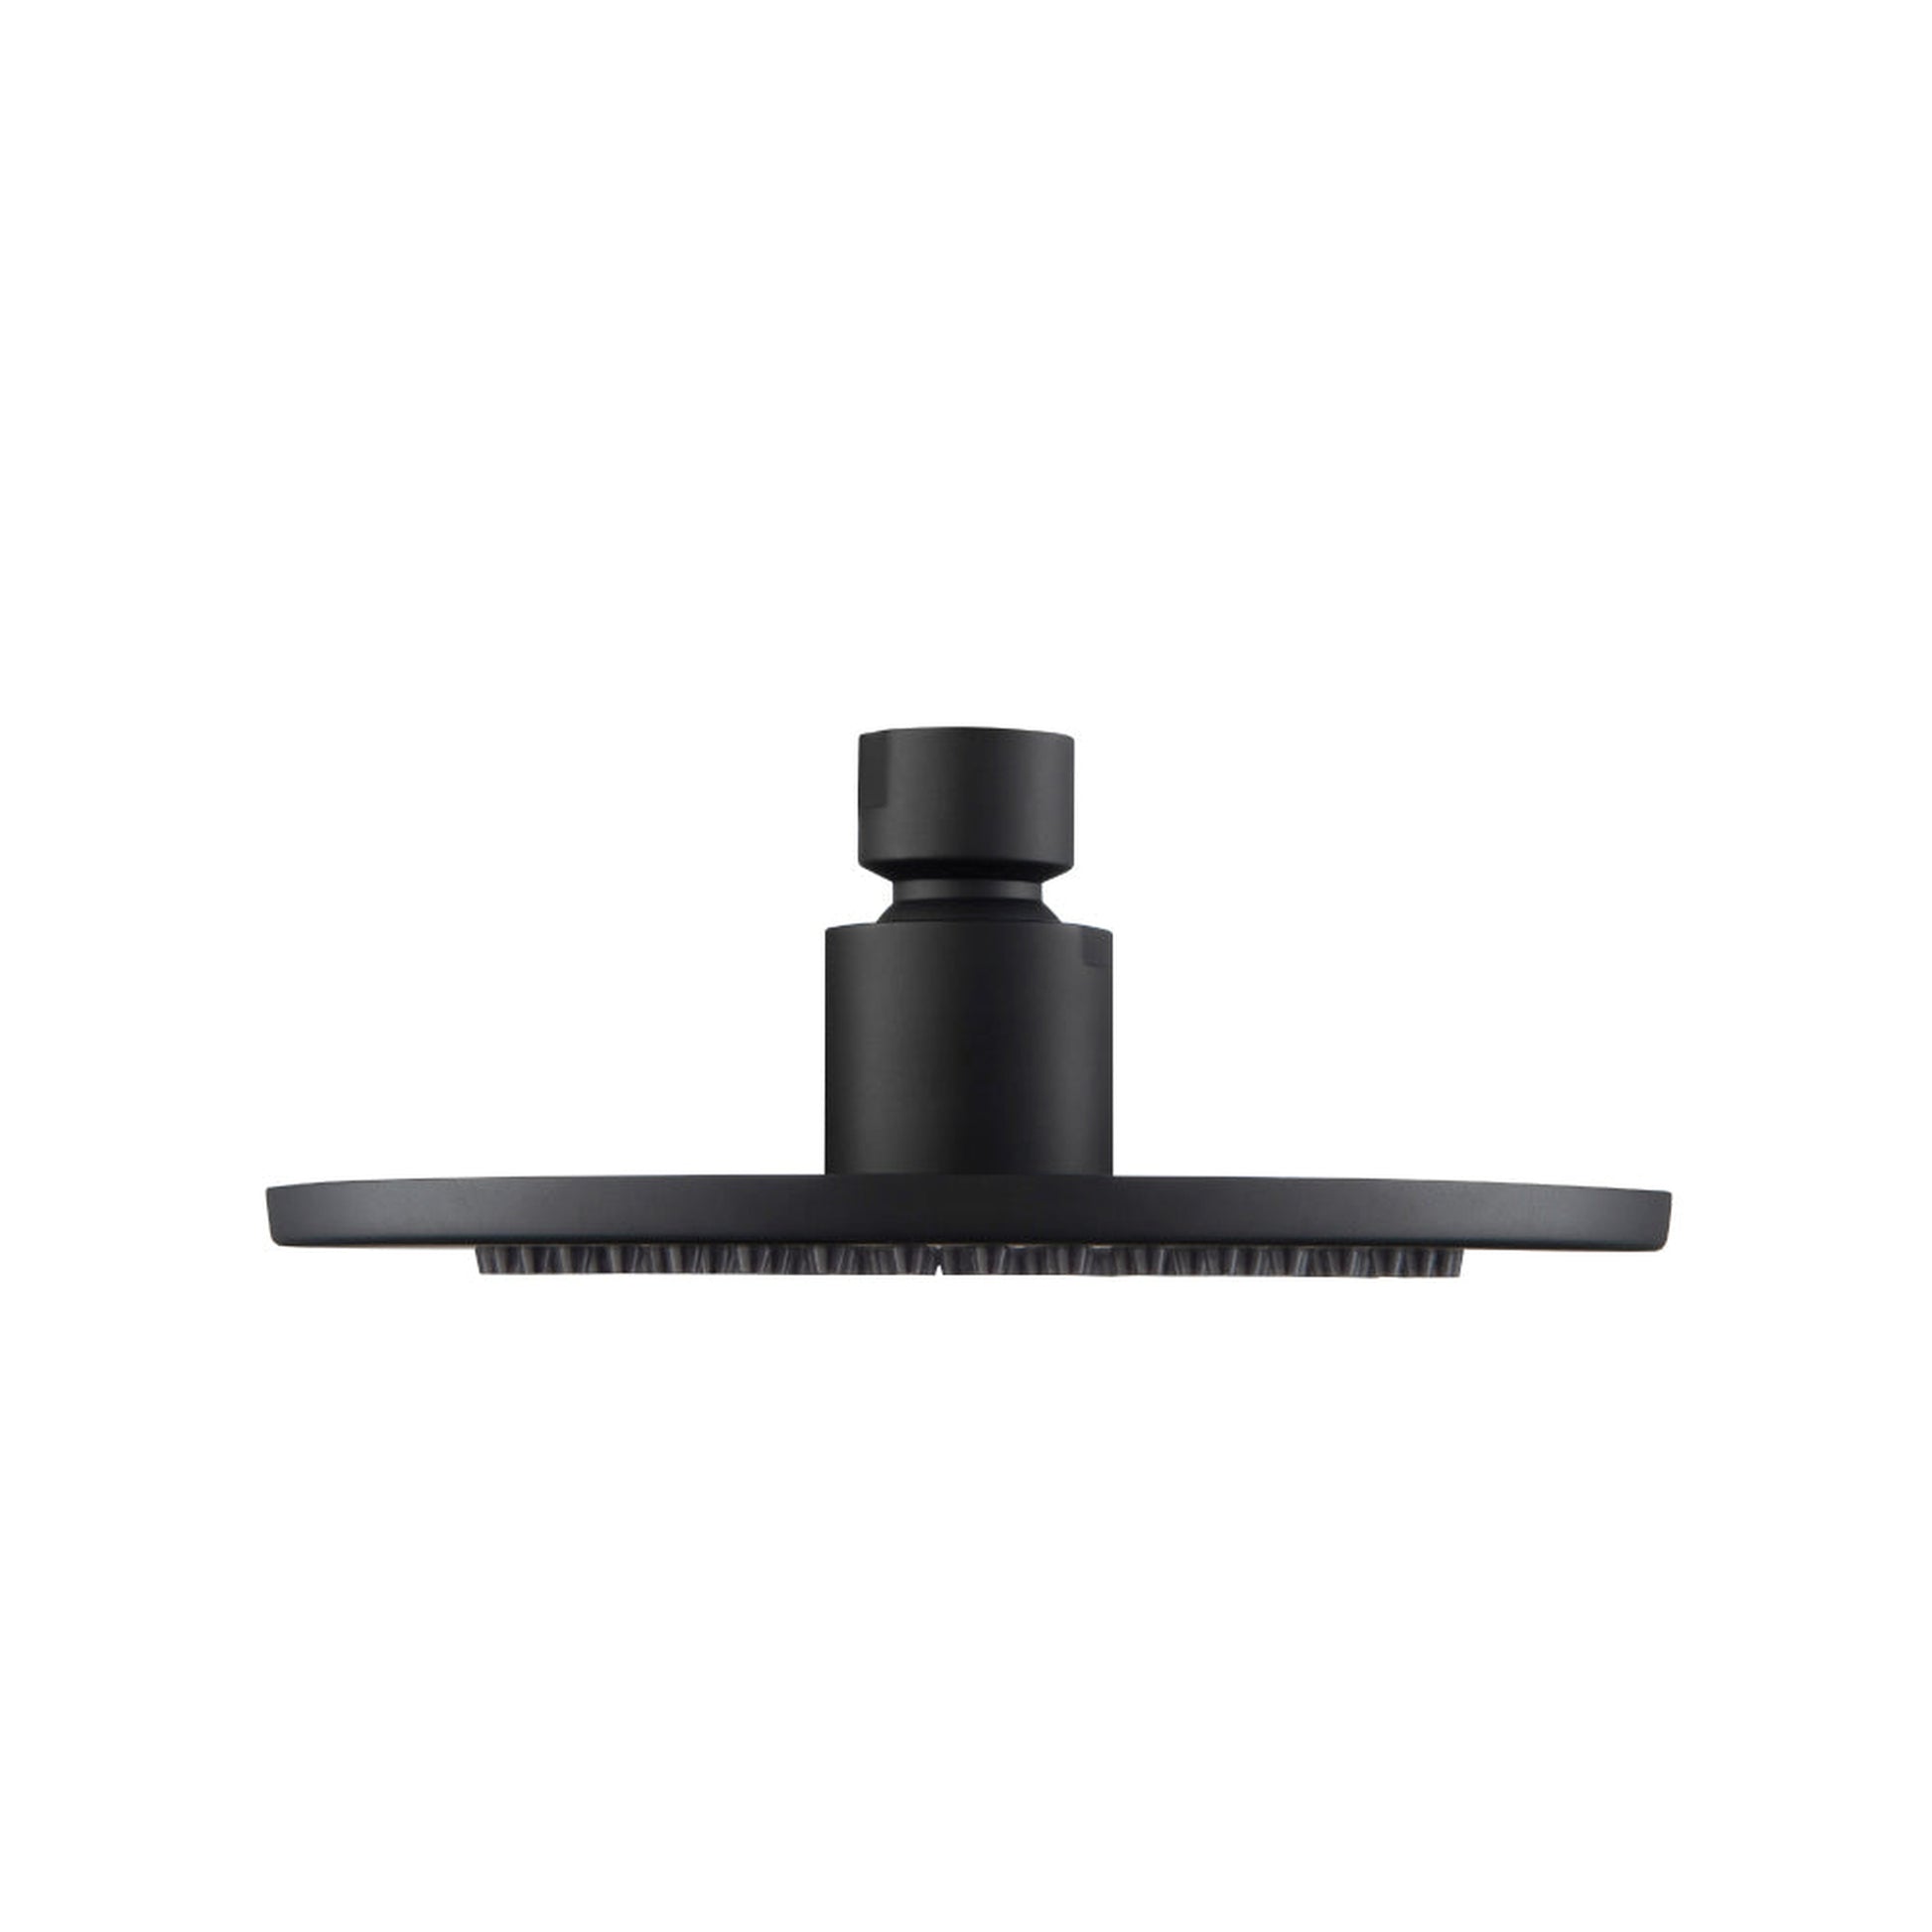 Isenberg Universal Fixtures 6" Single Function Round Matte Black Solid Brass Rain Shower Head